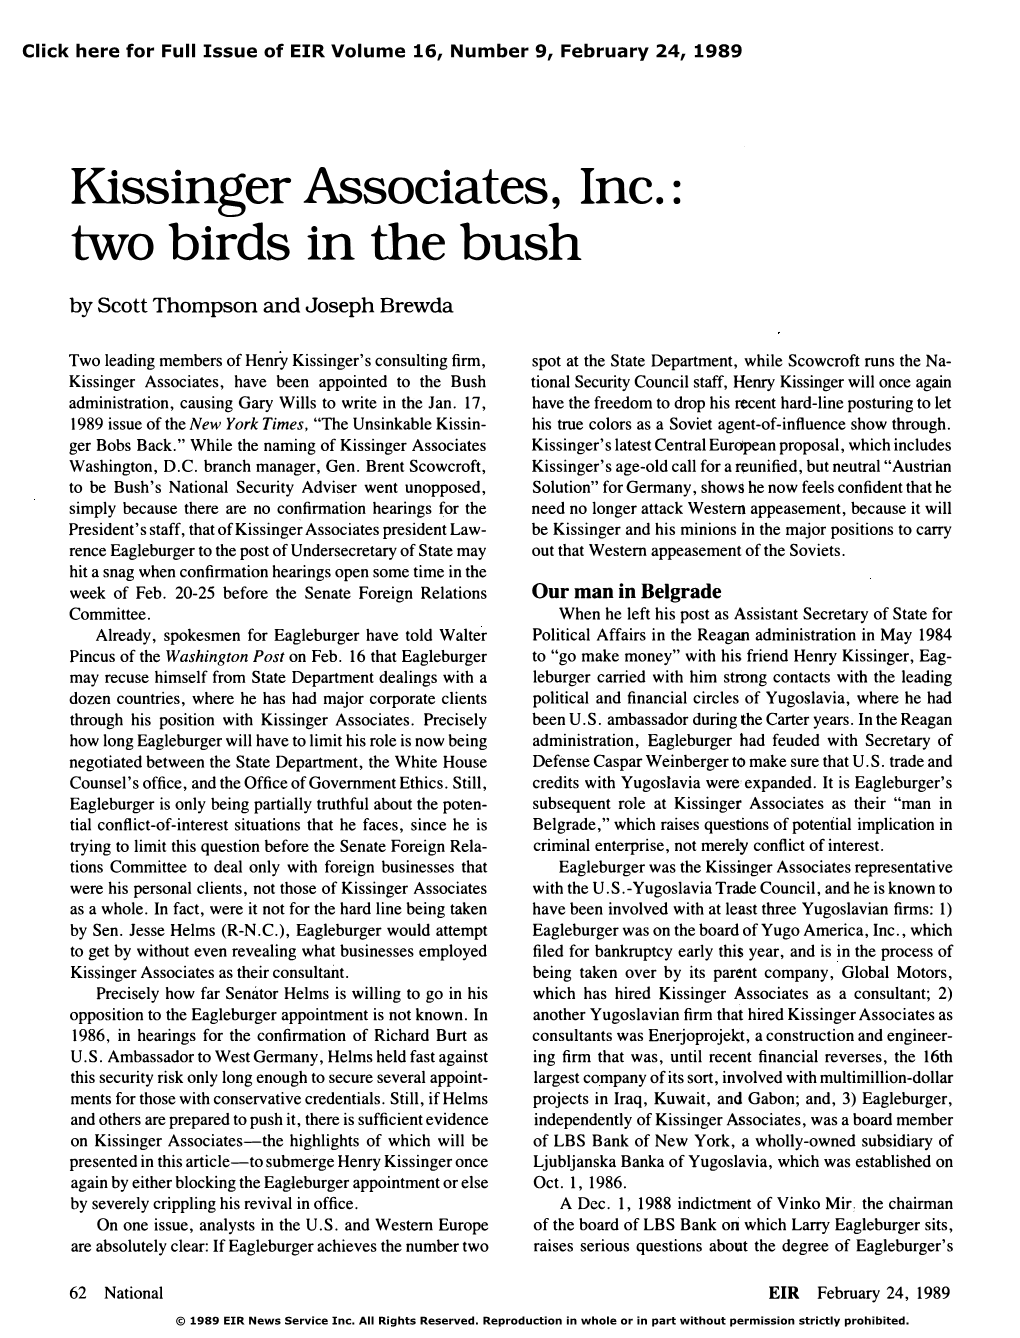 Kissinger Associates, Inc.: Two Birds in the Bush